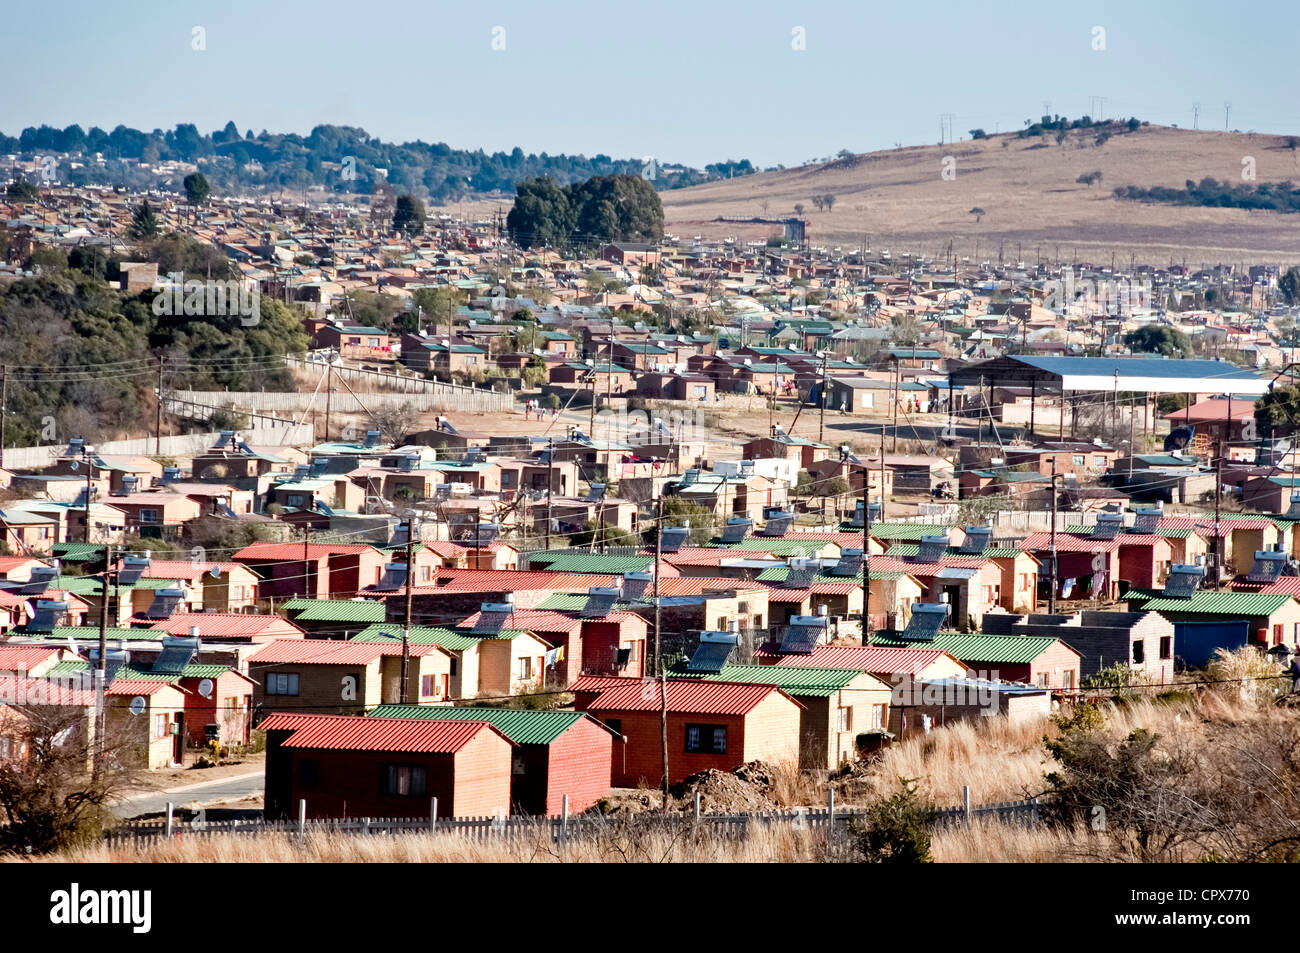 Landscape shot of a housing settlement Stock Photo